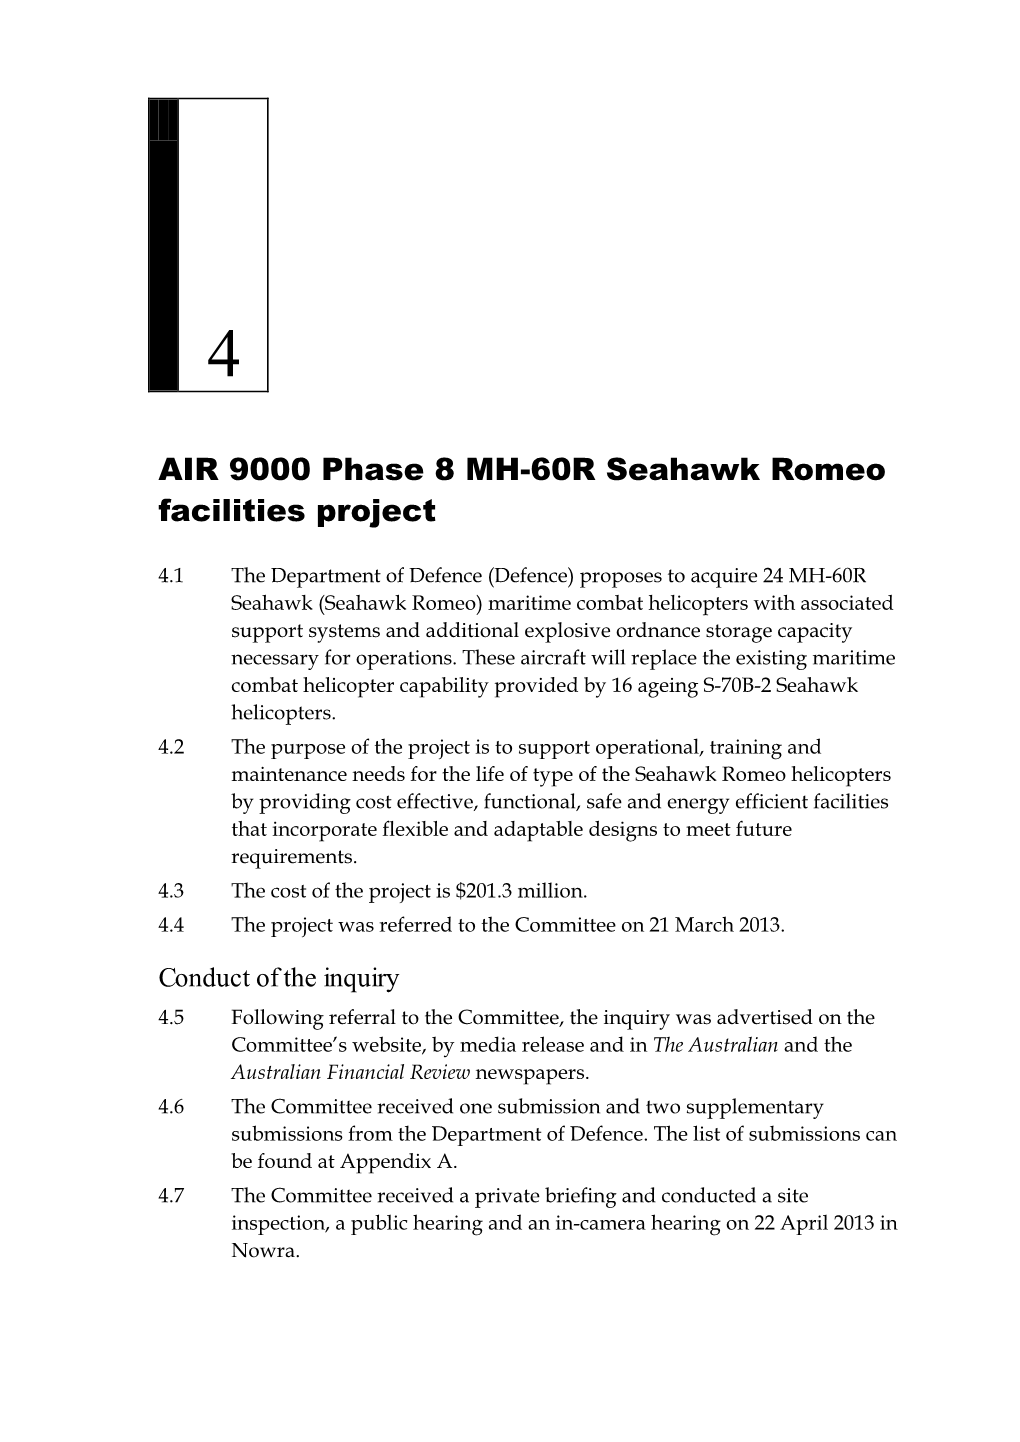 Chapter 4: AIR 9000 Phase 8 MH-60R Seahawk Romeo Facilites